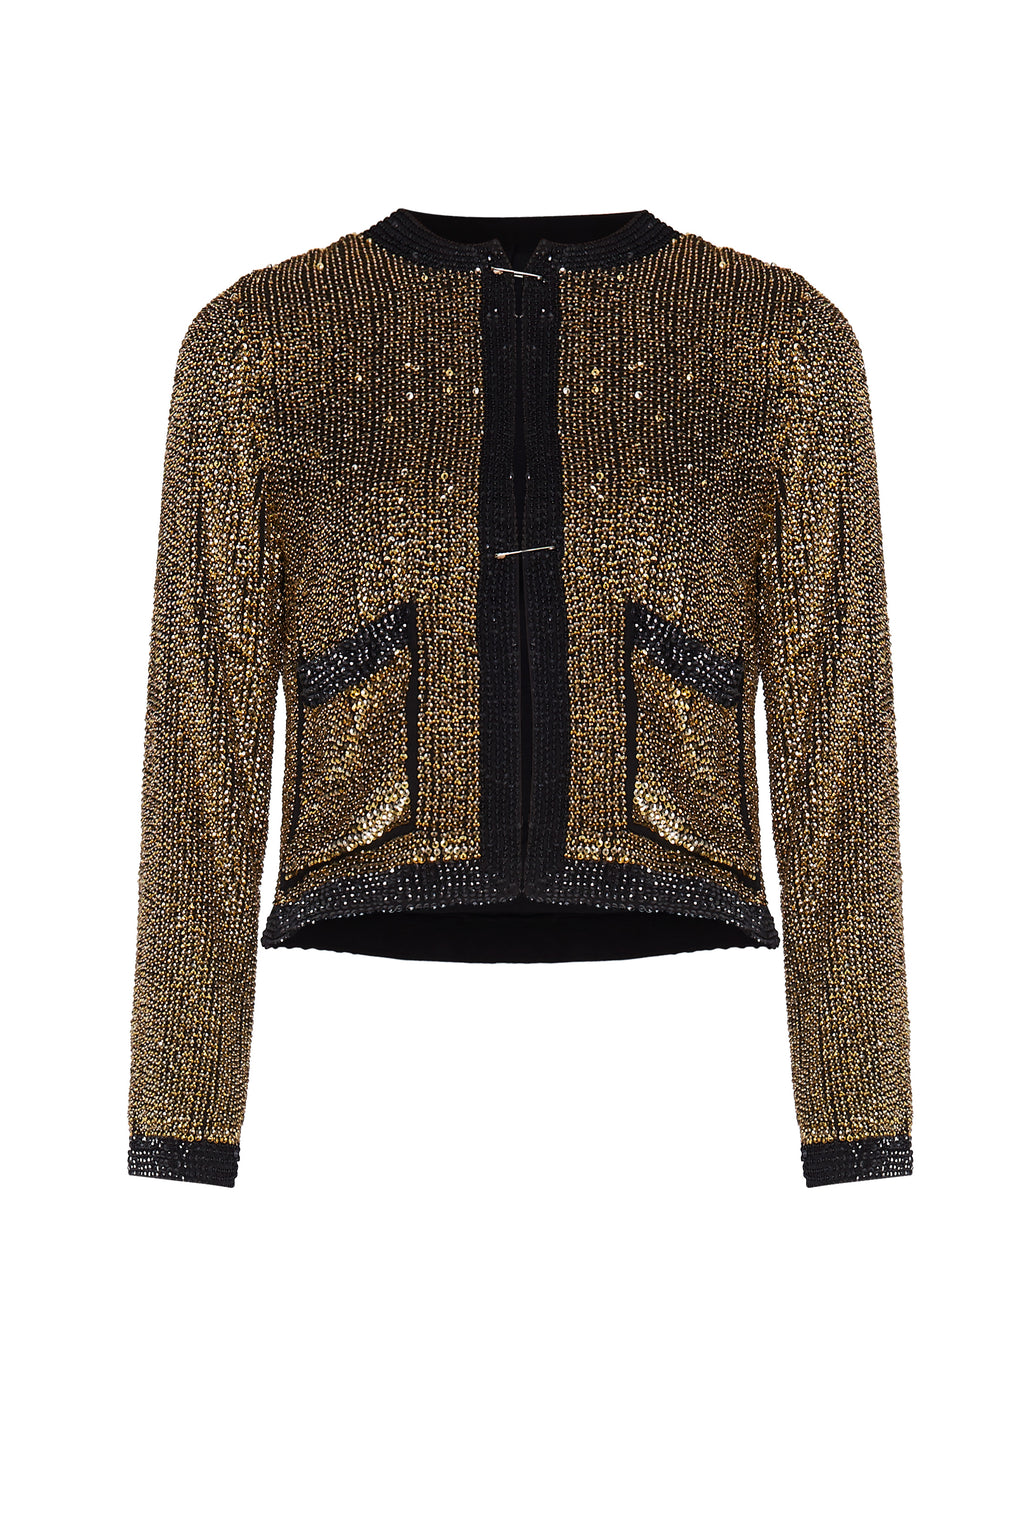 1940s Golden Black Beaded Jacket with Pockets - Annie's Ibiza